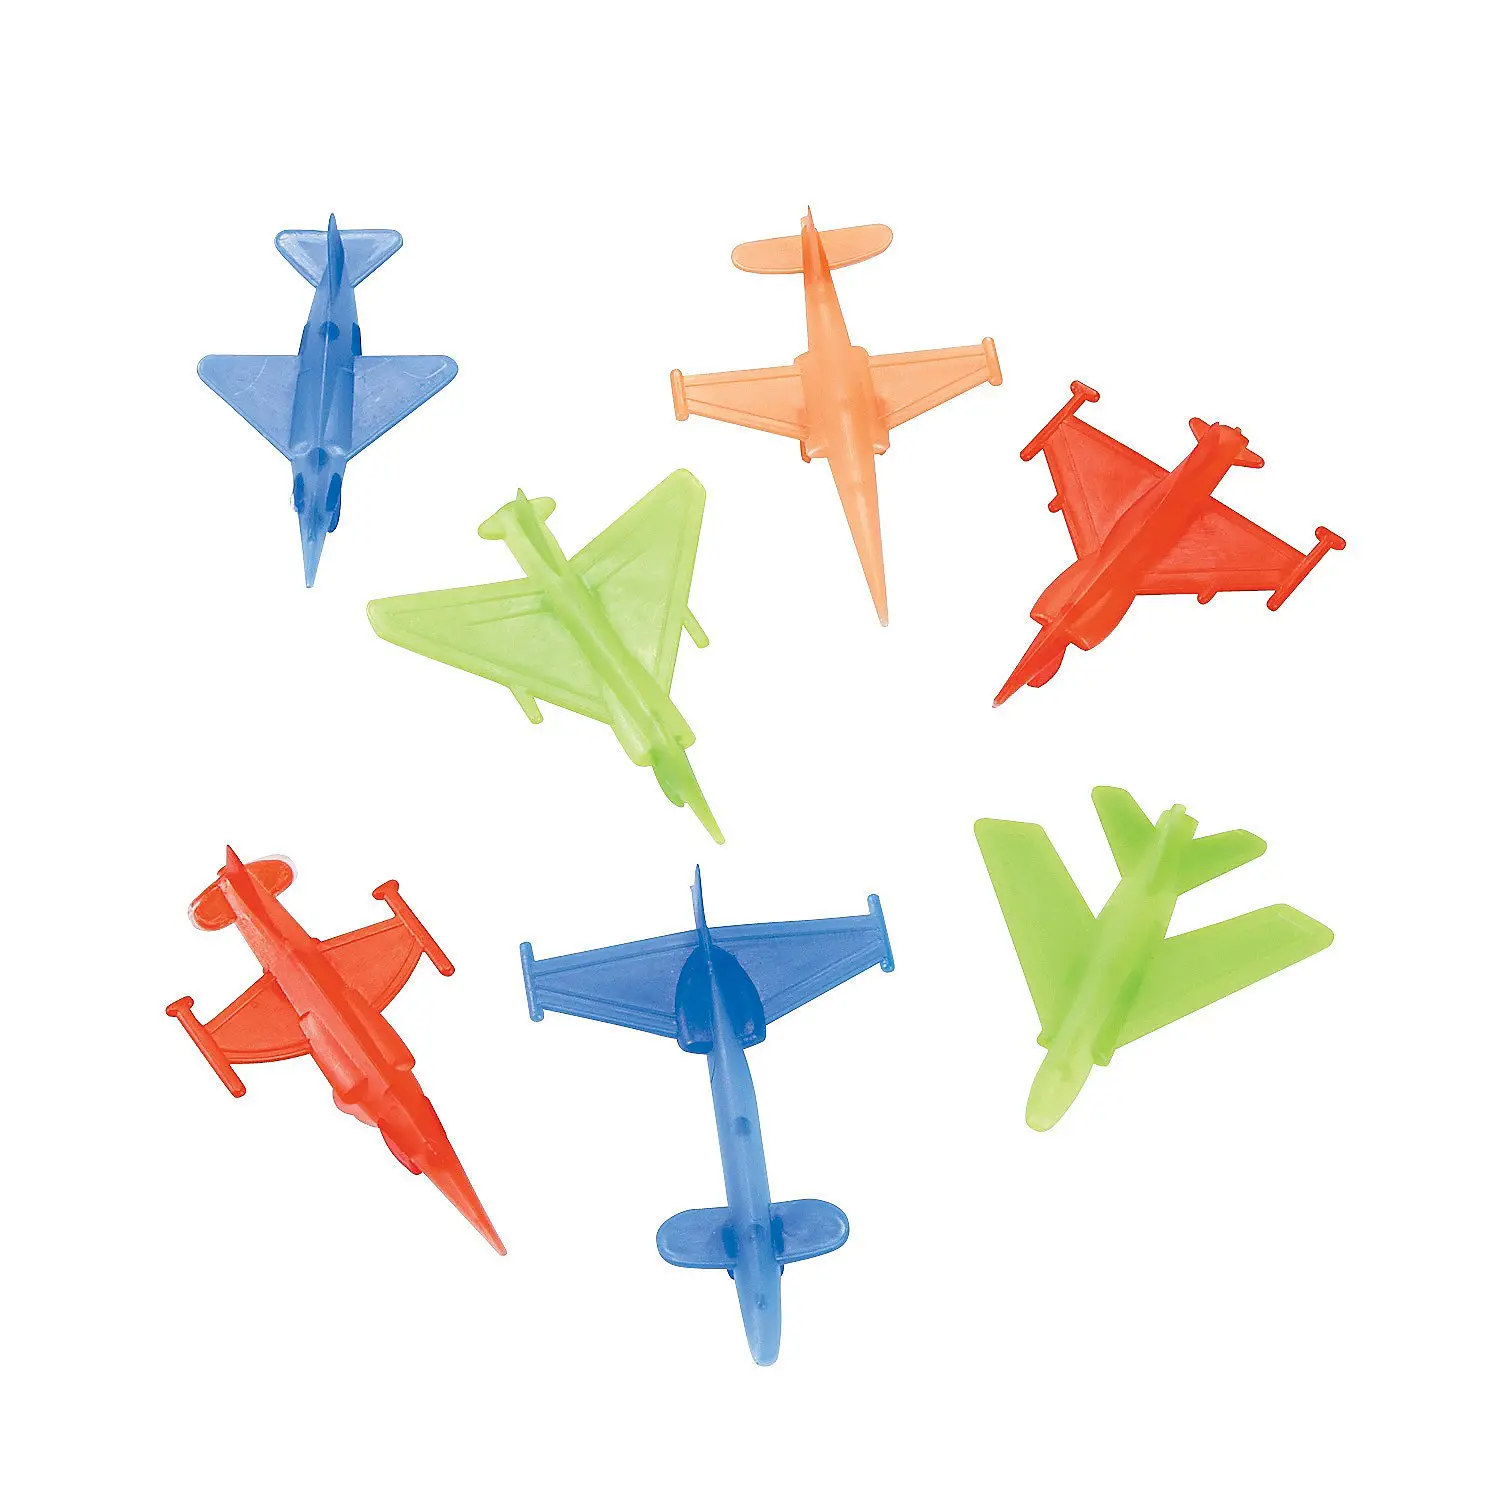 avioncitos de plastico - Cuál es el objetivo del juego del avioncito